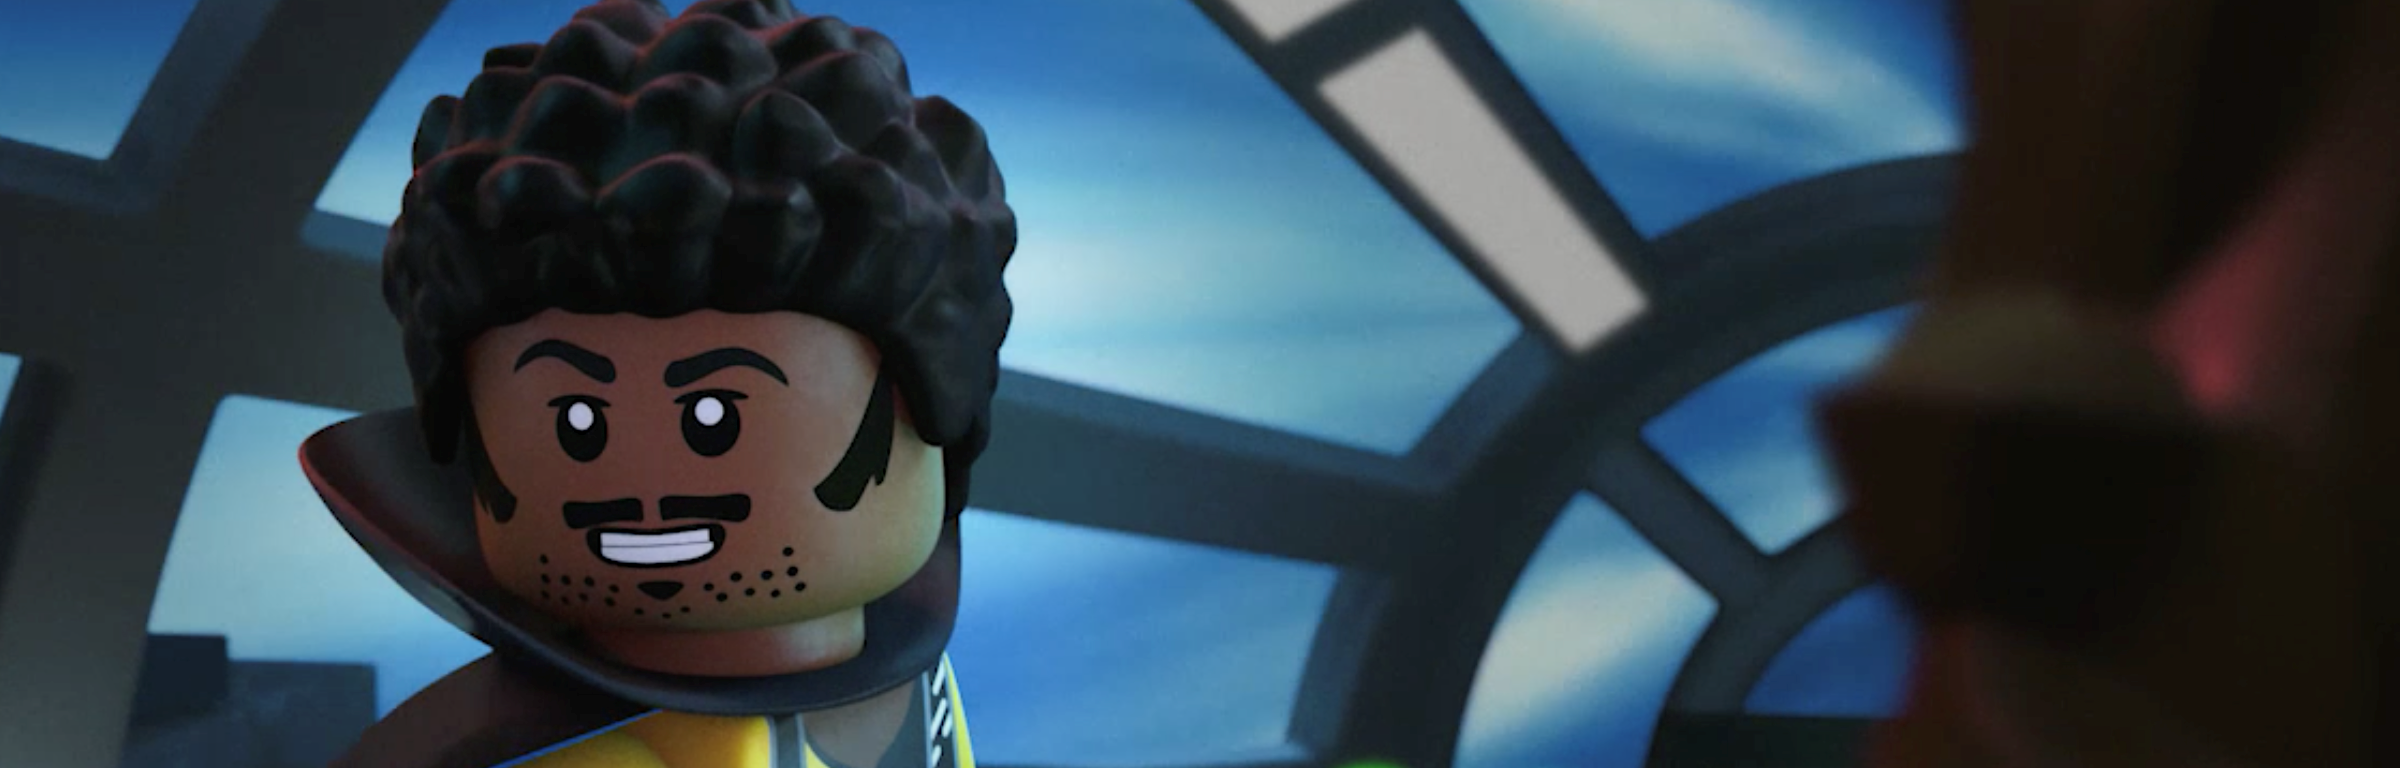 Lego star wars AllStars Wil Film animation production